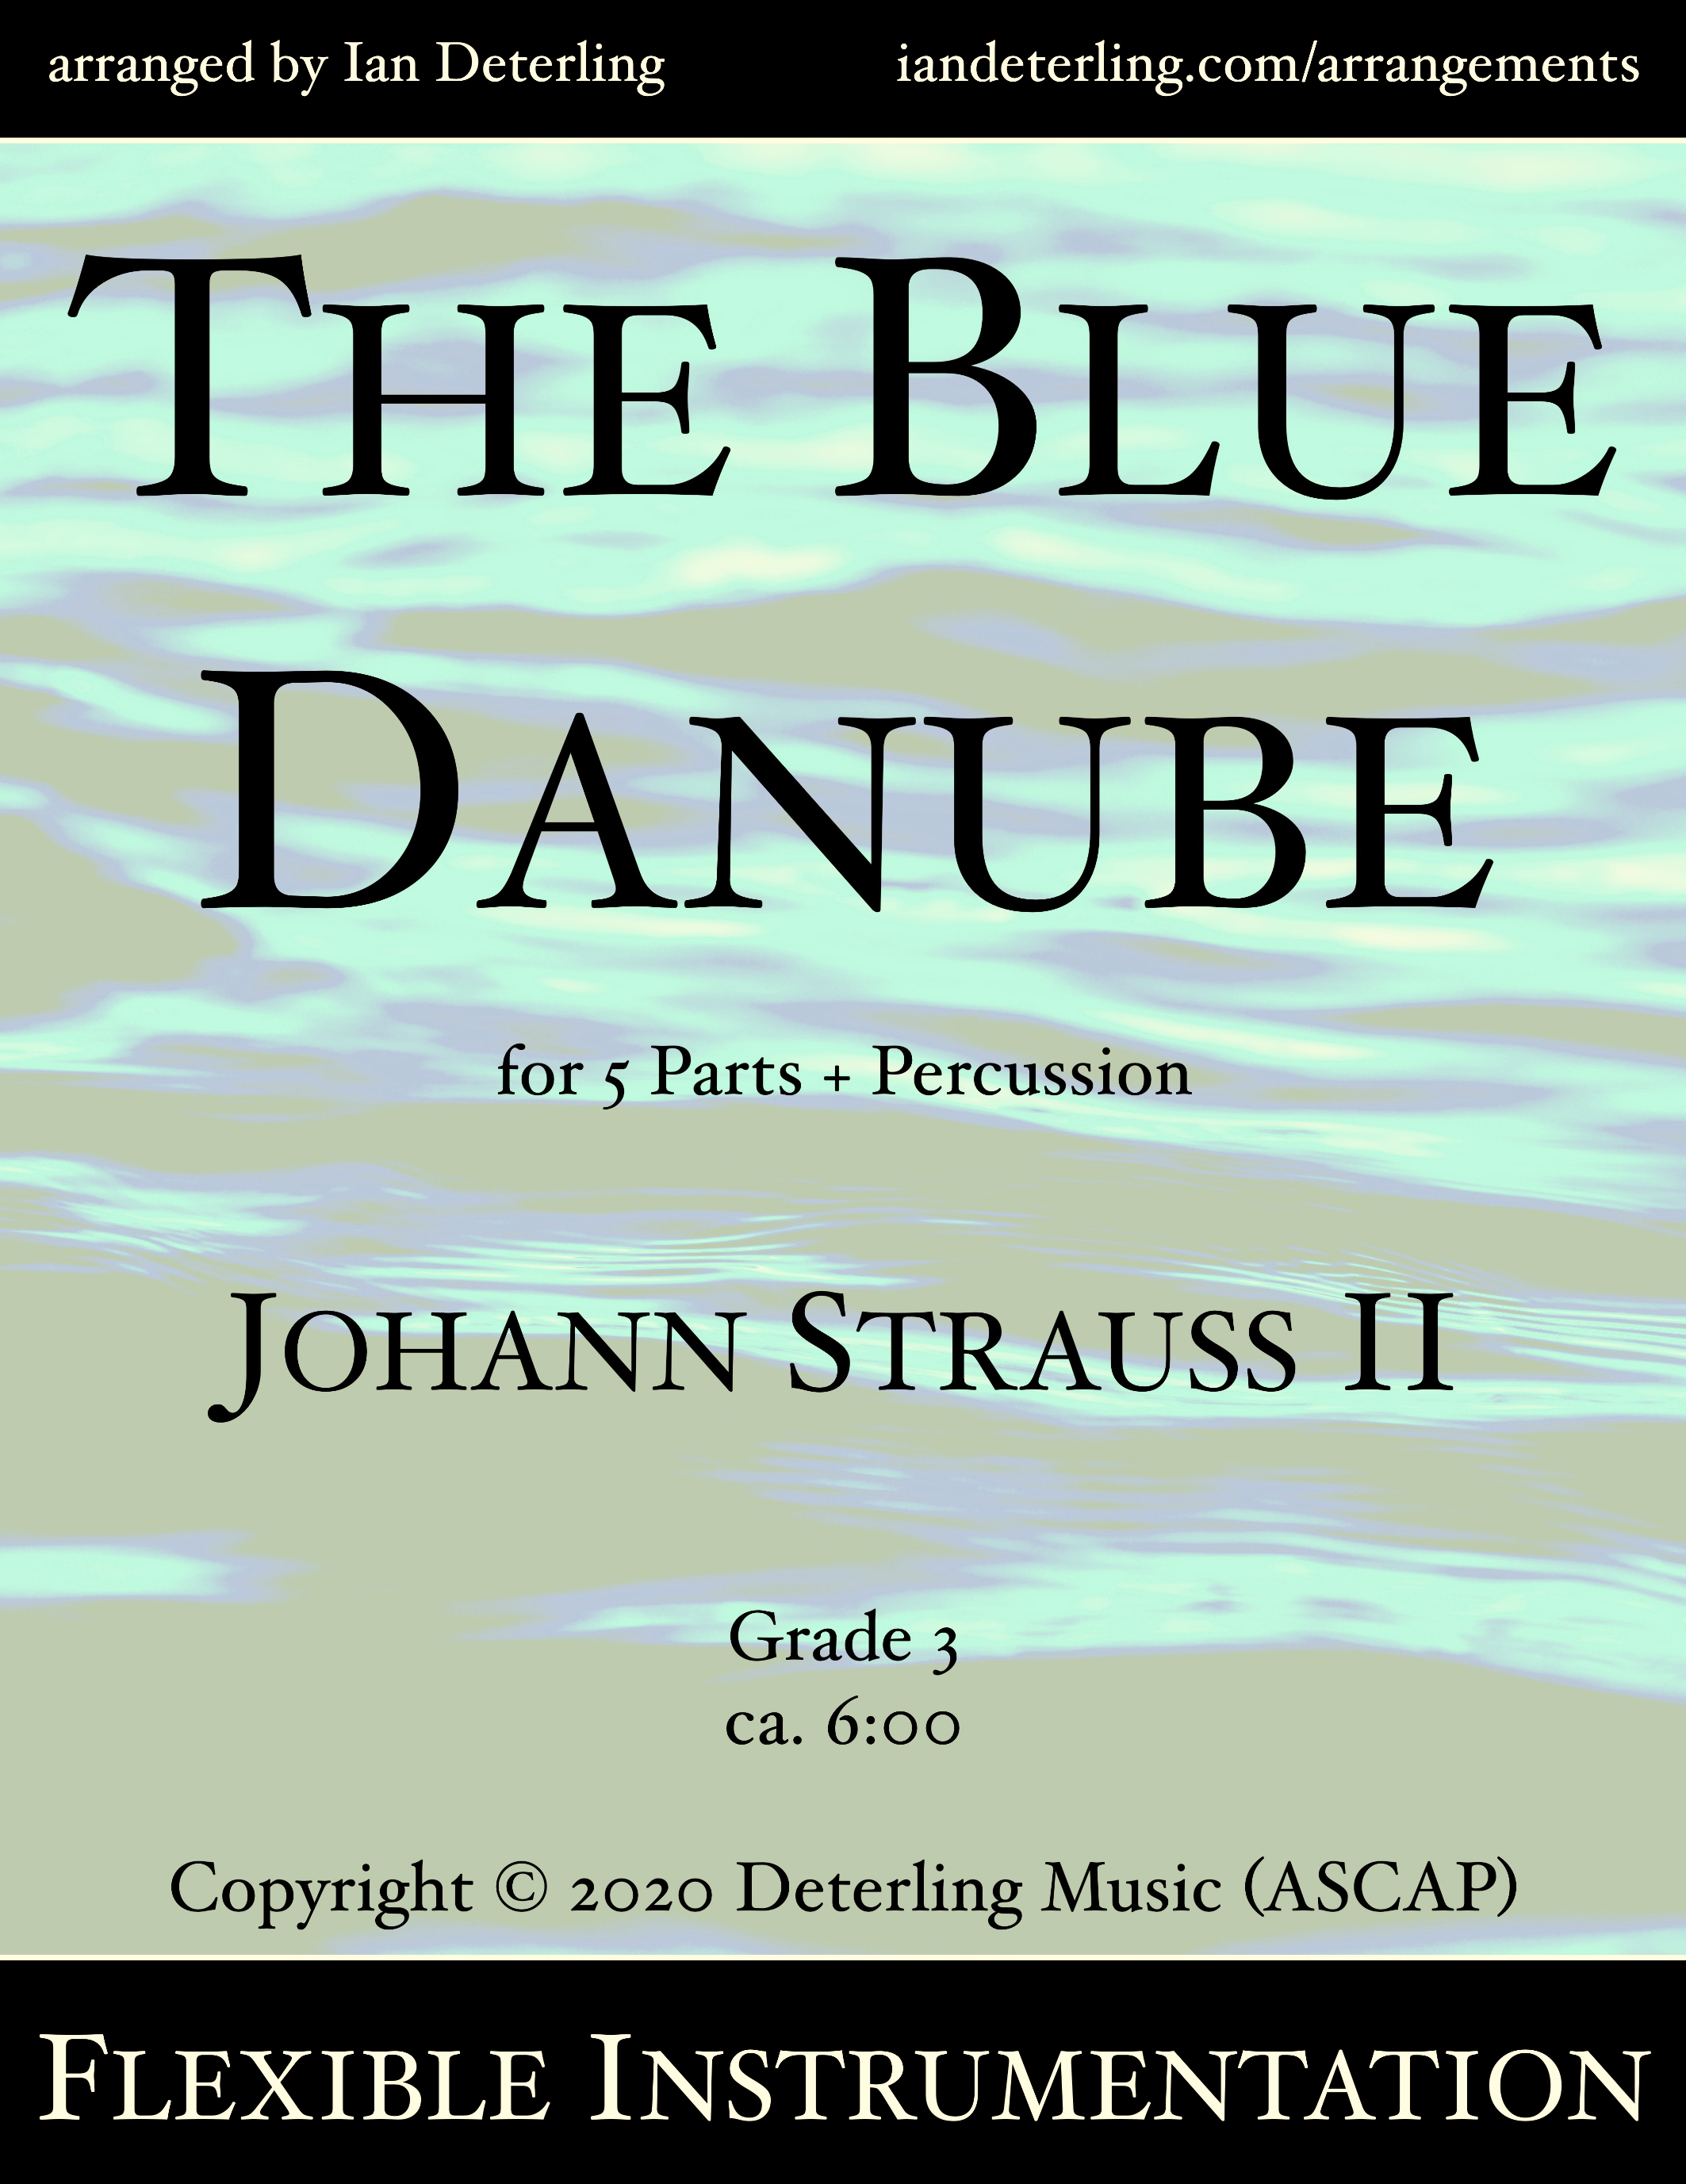 The Blue Danube flexible instrumentation 1.png